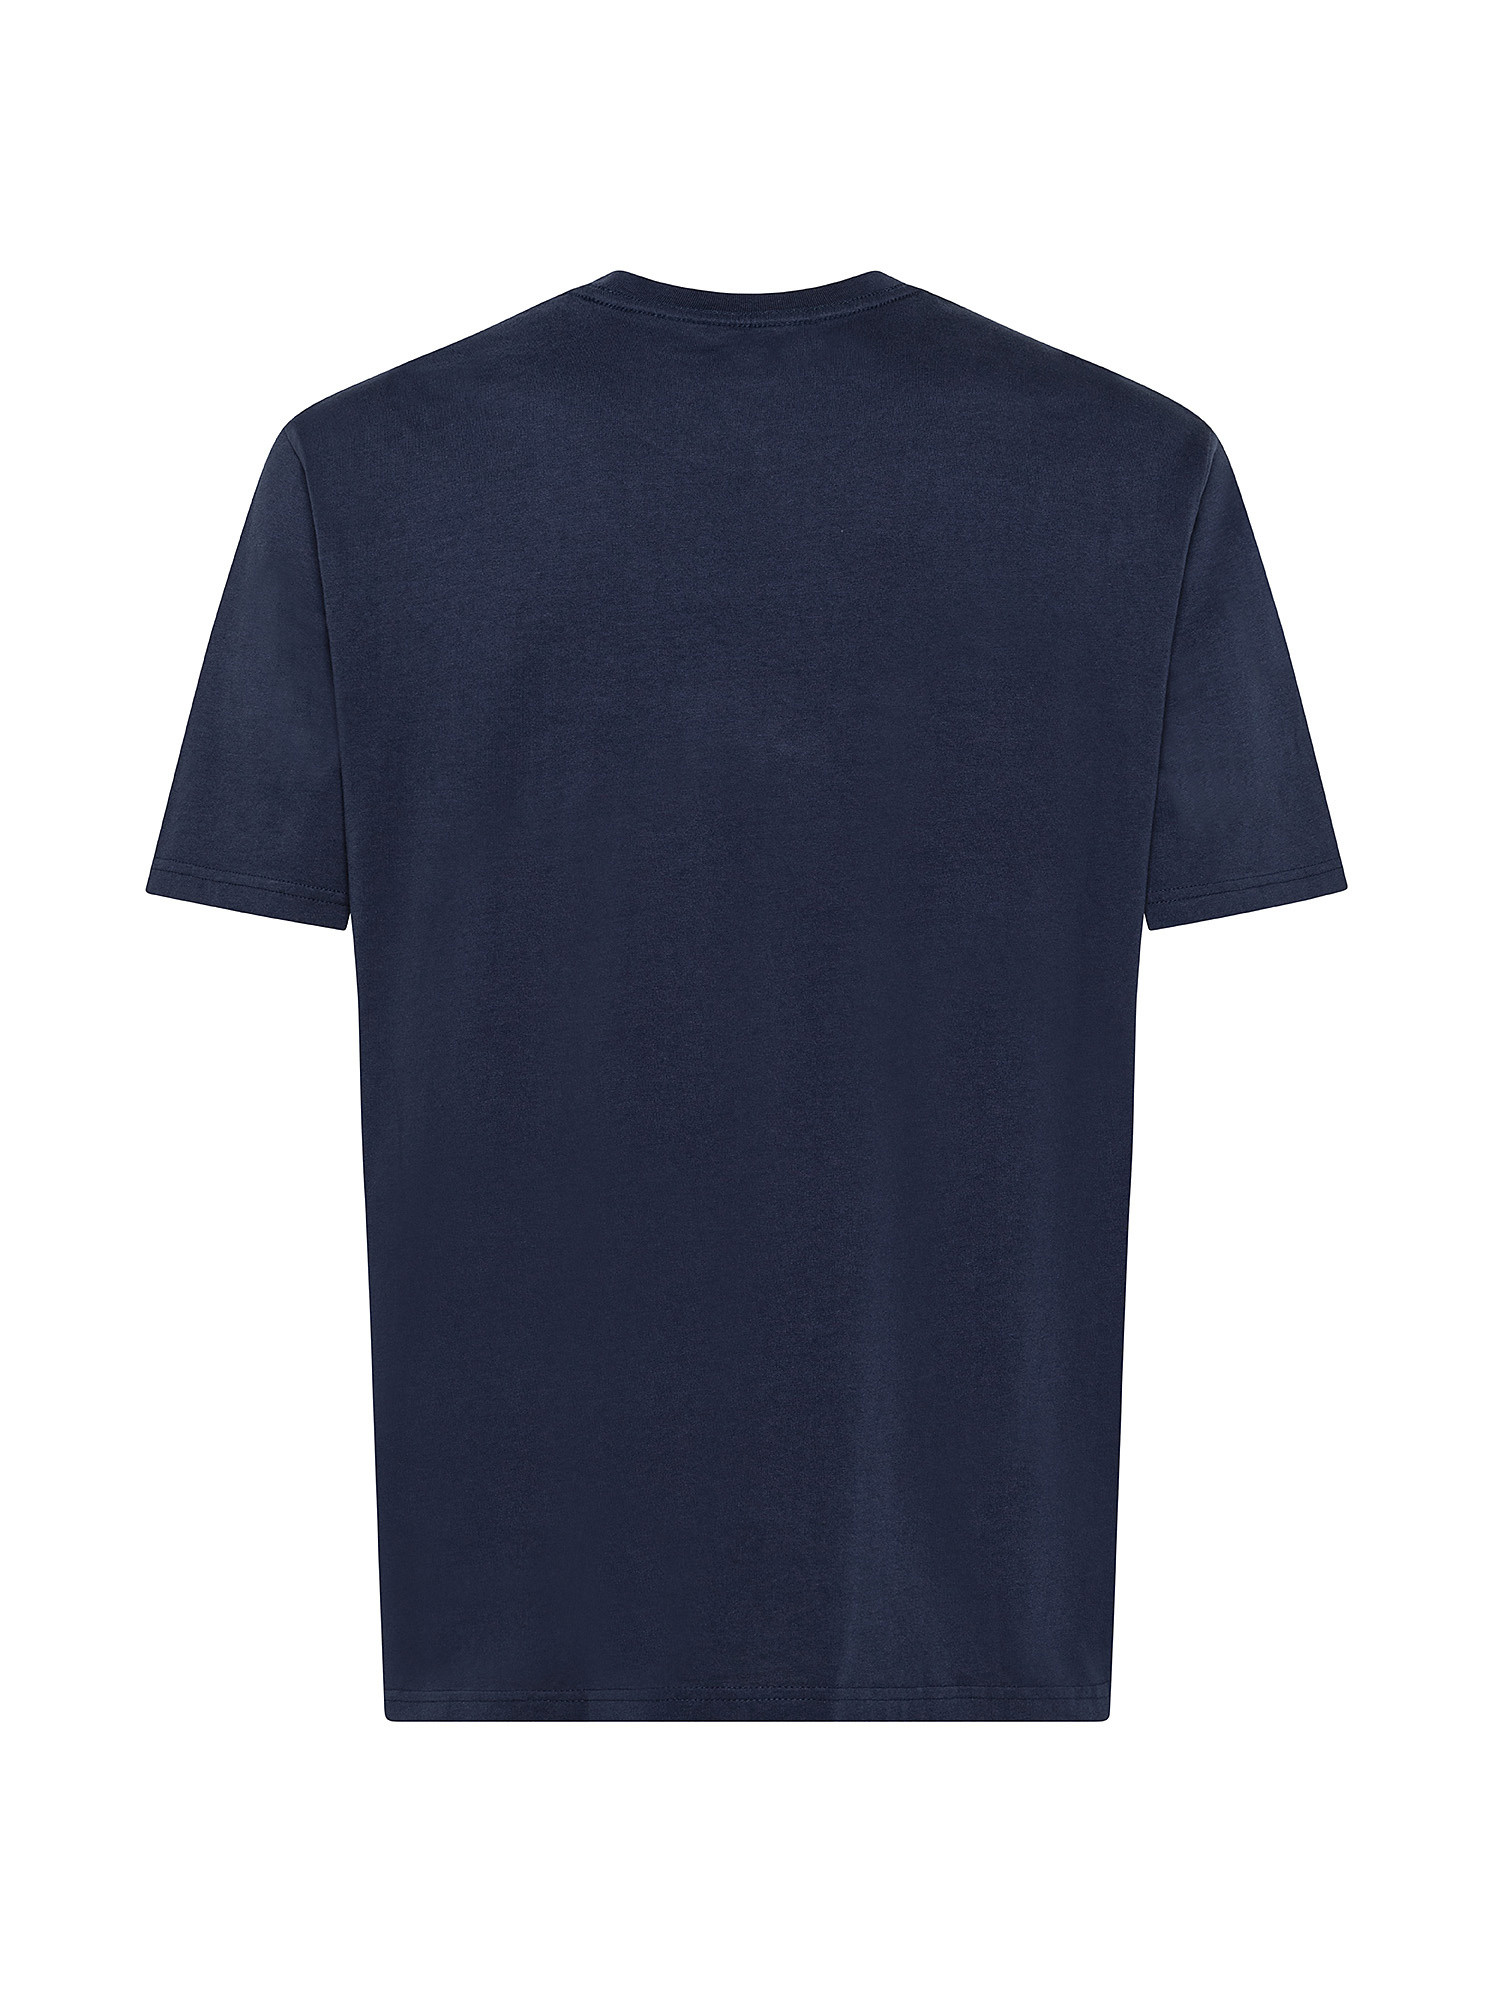 T-shirt con stampa, Blu, large image number 1